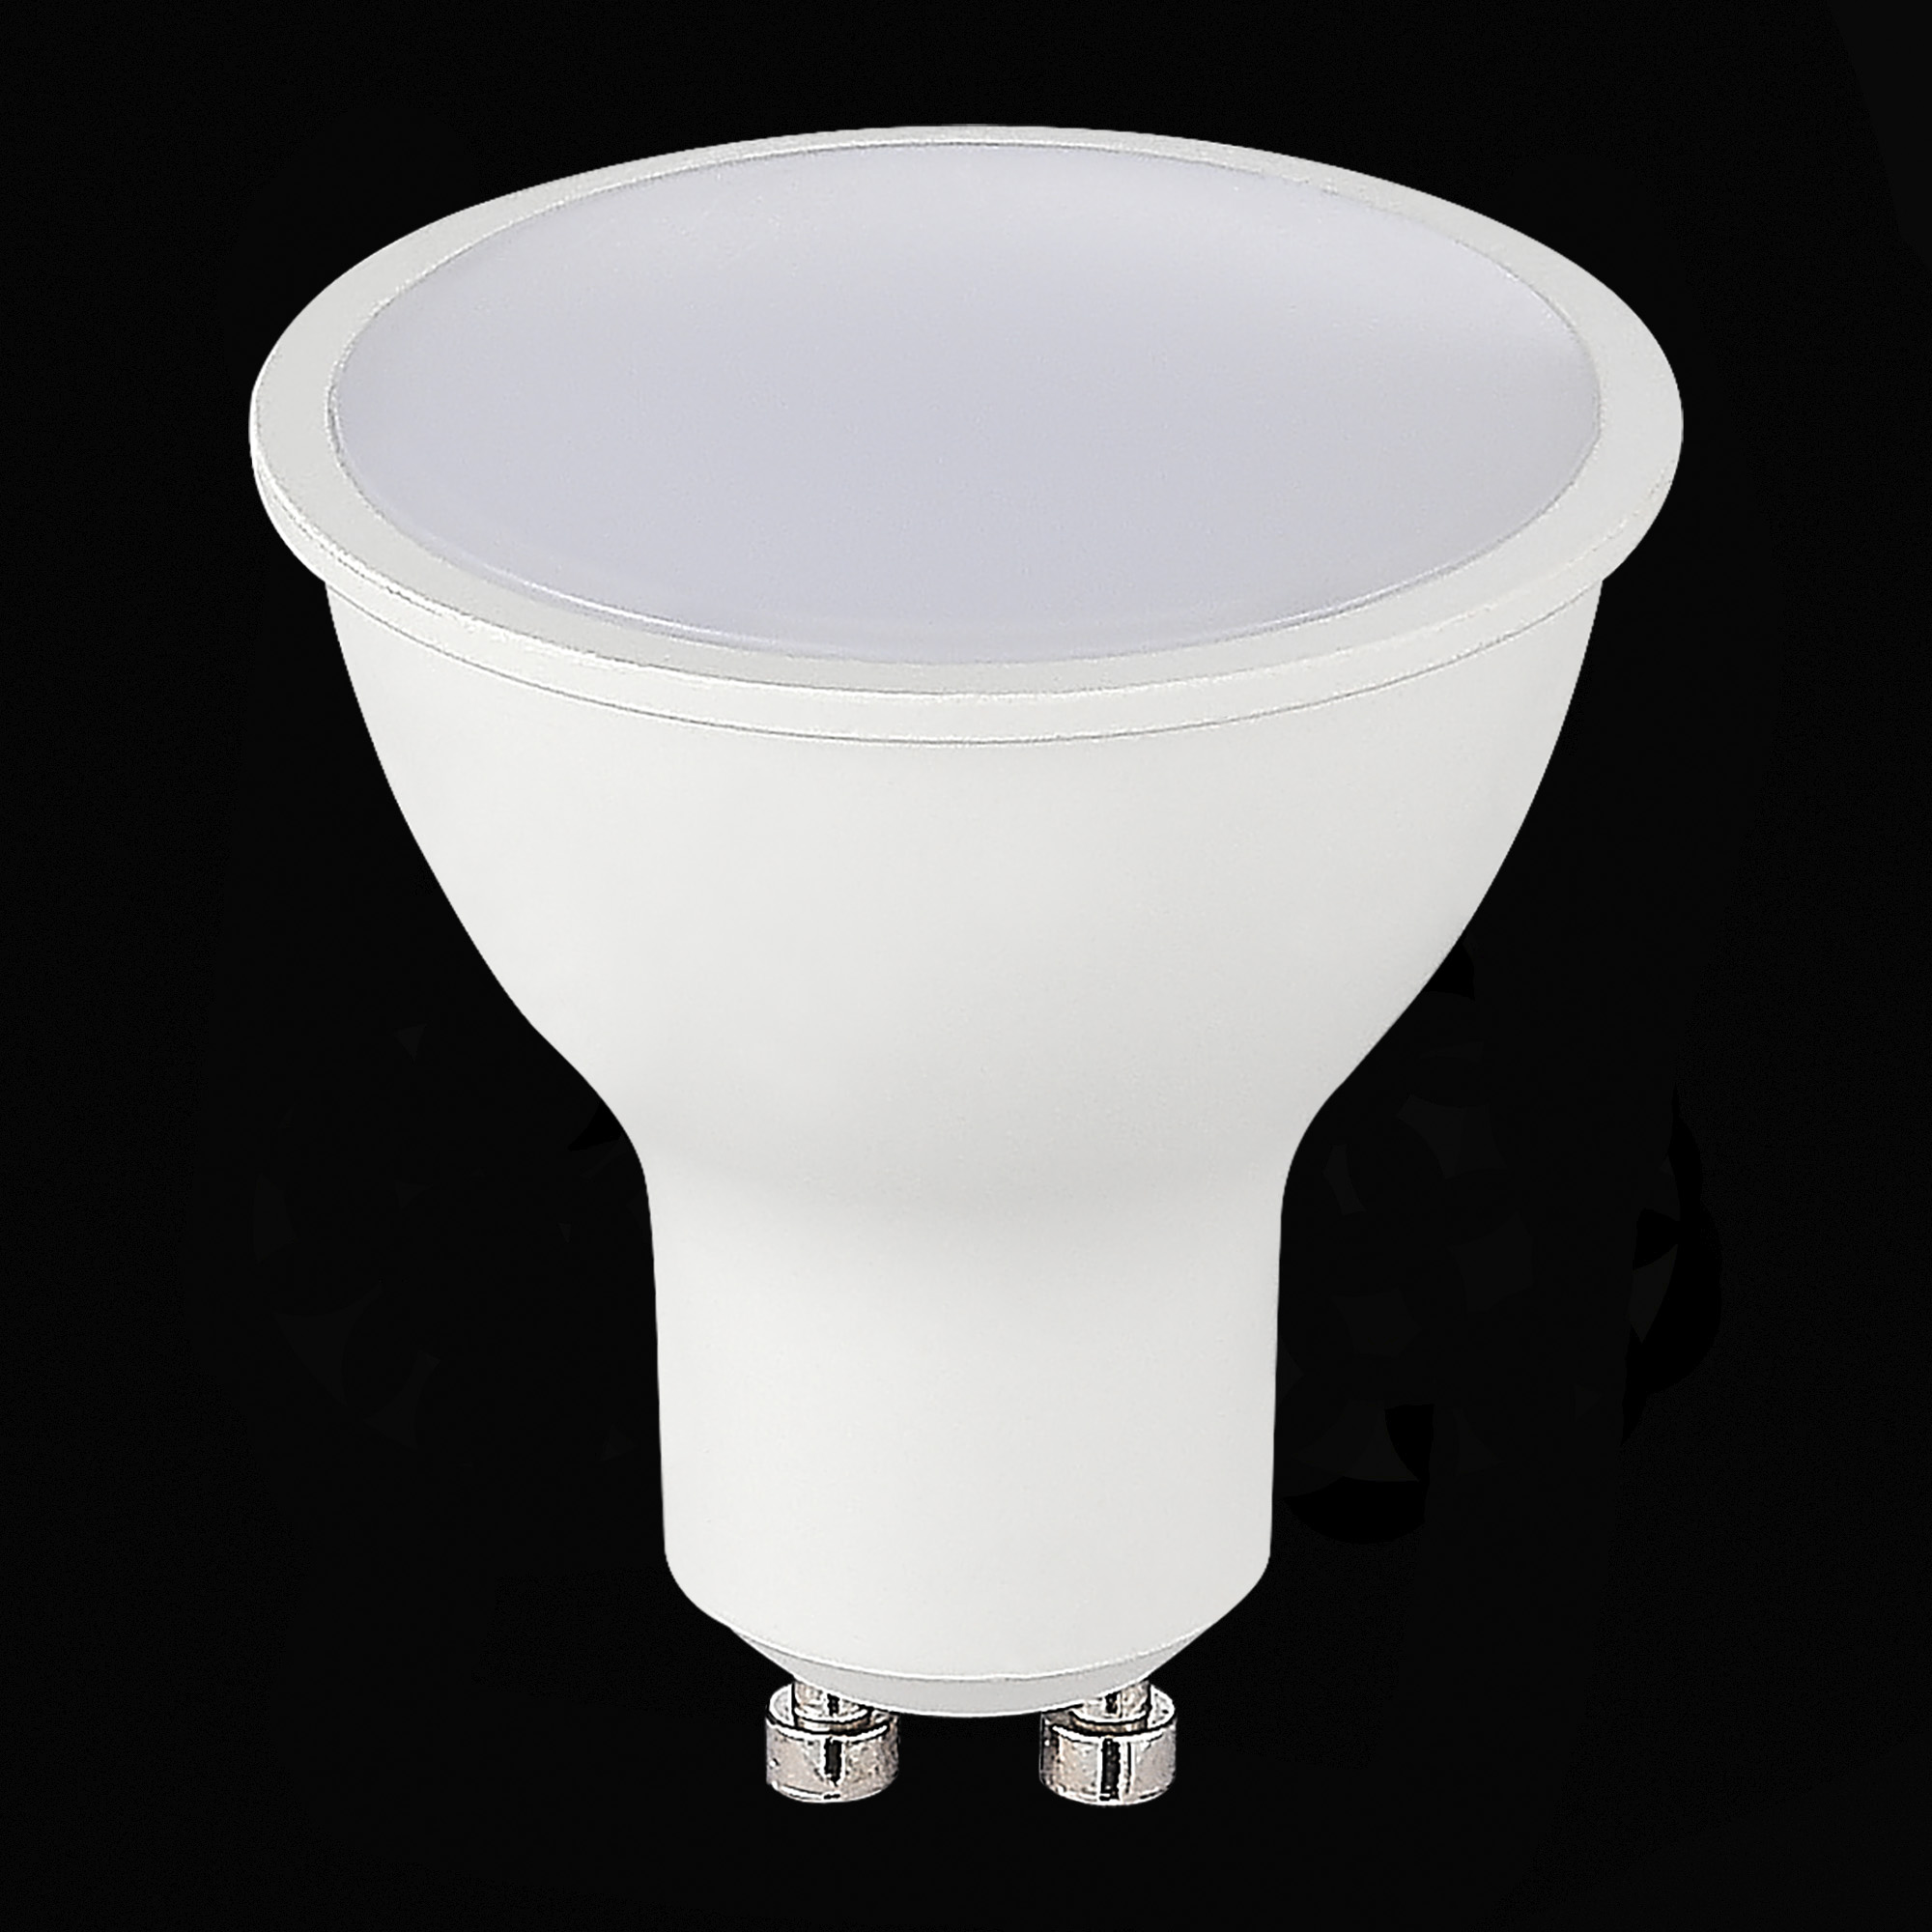 Светодиодная лампа ST Luce 5W 400lm 2700K-6500K GU10 ST9100.109.05, цвет белый - фото 2